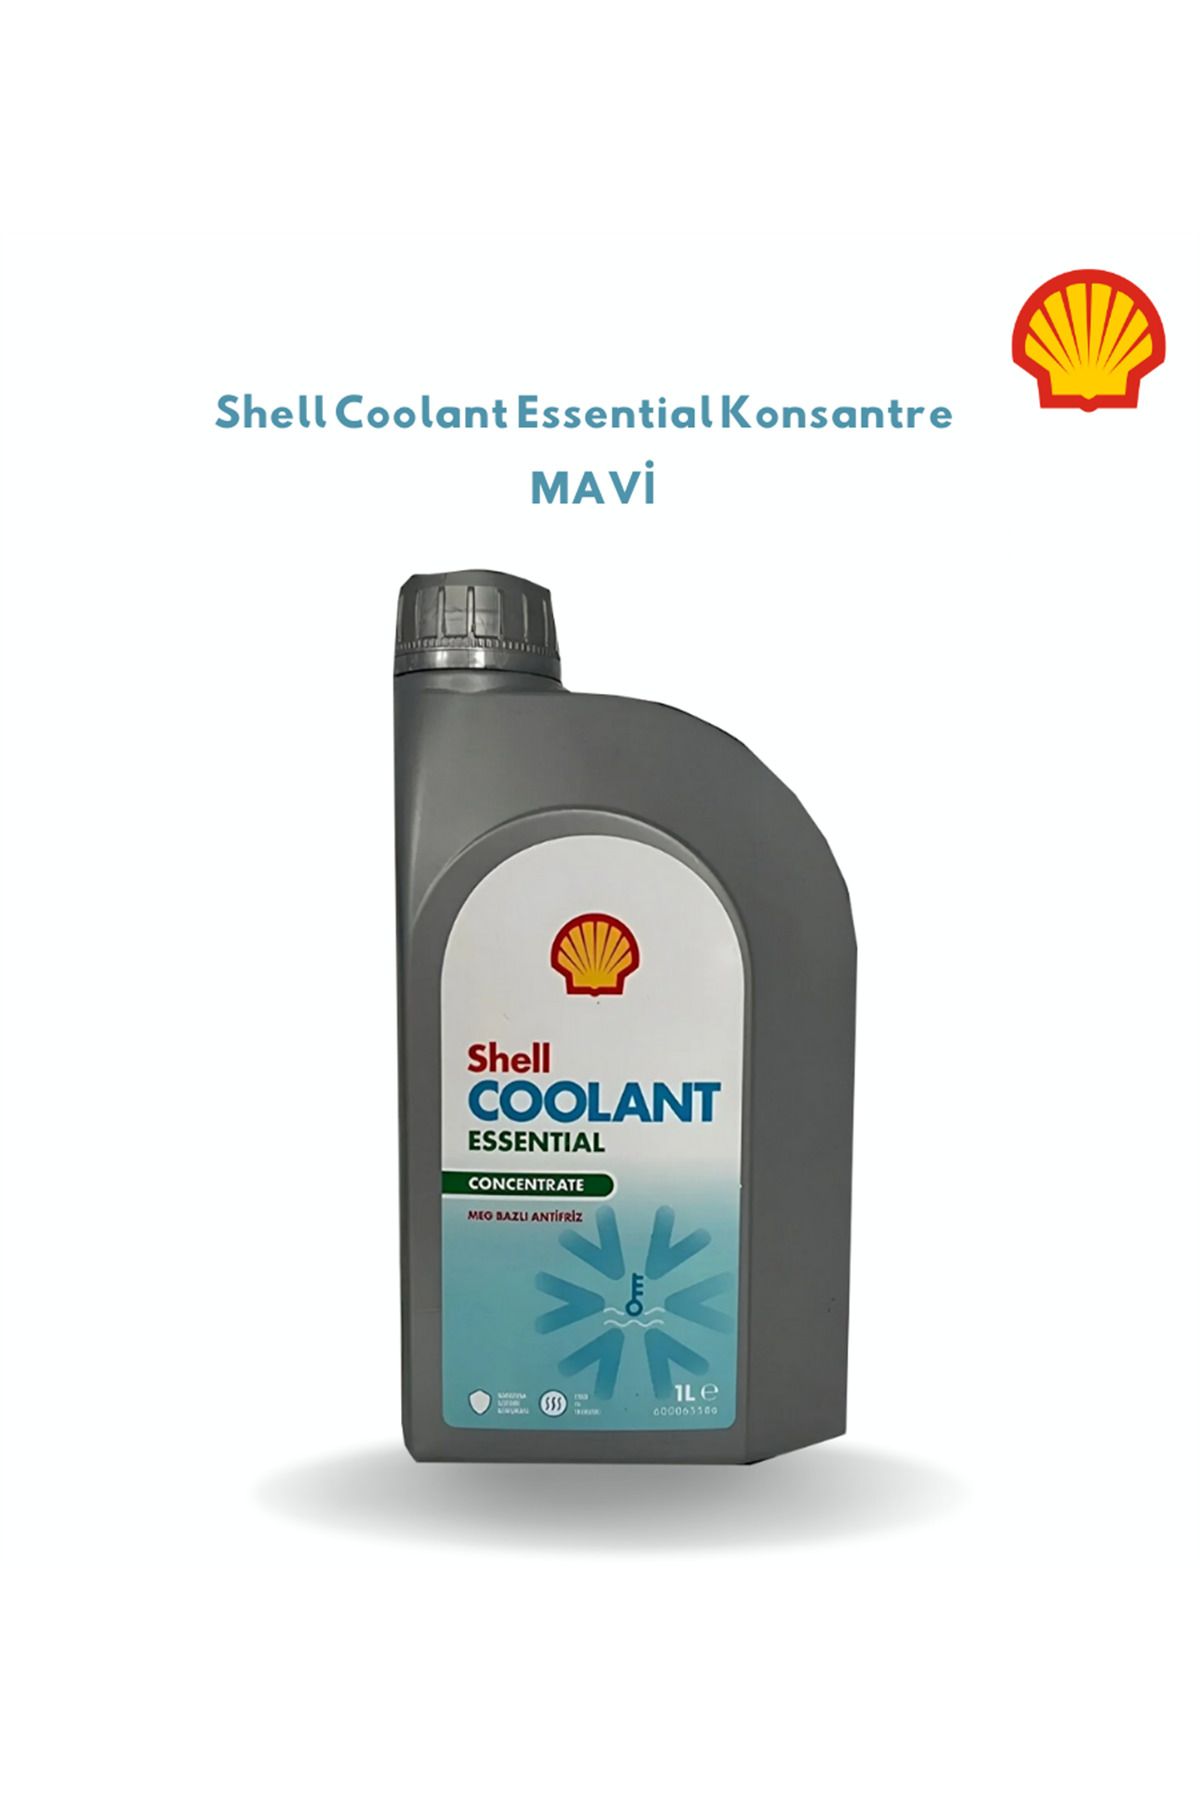 Shell Coolant Essential Konsantre 1 Litre (Mavi) Antifriz